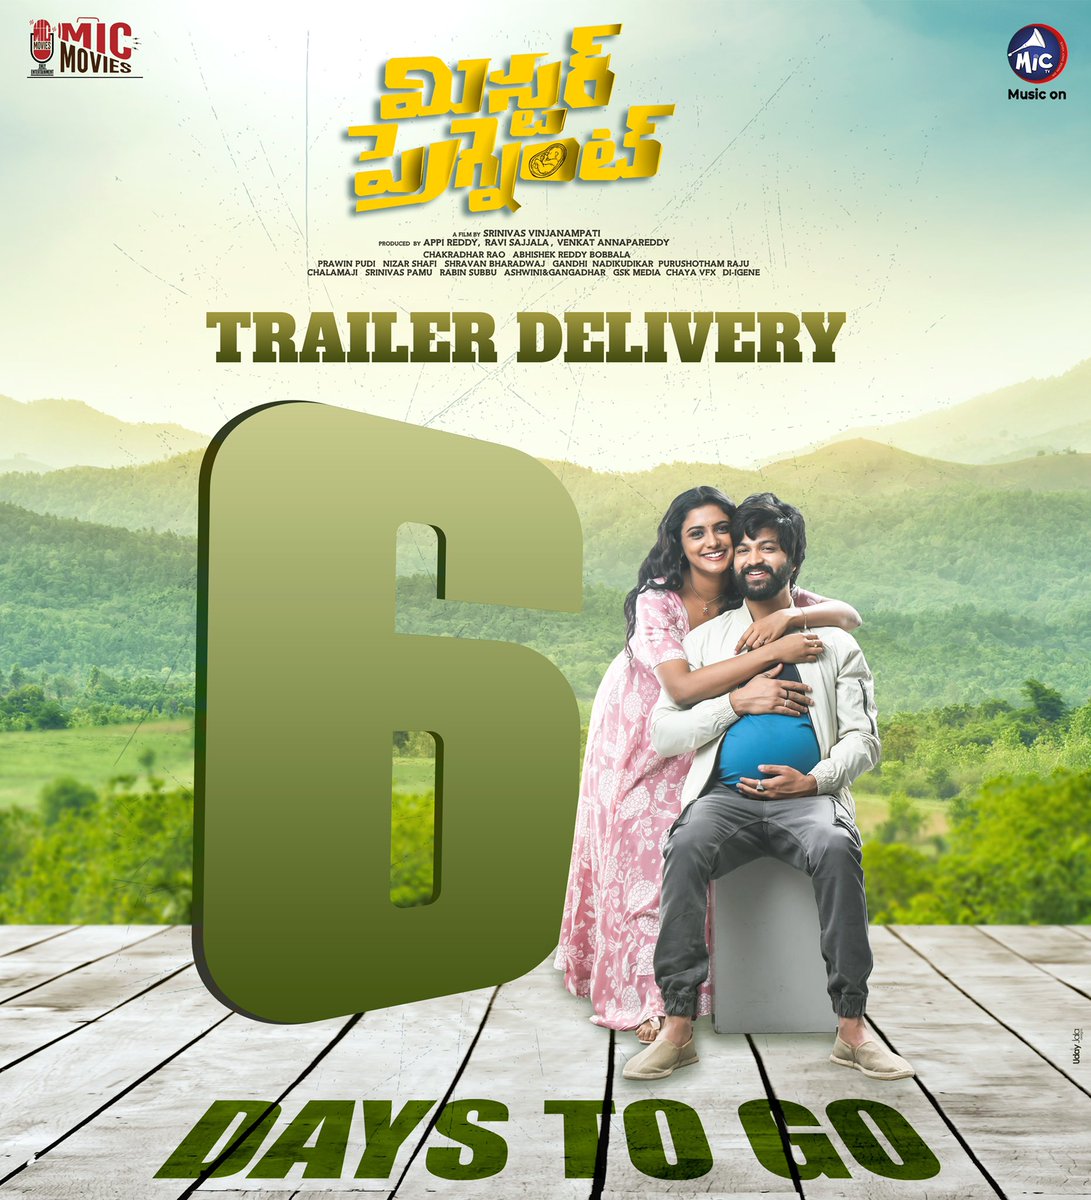 It's not 6 months anymore... We are just 6 days away from the trailer launch. Excited??? #1stseptember #trailerlaunch #mrpregnant #6daystogo #micmovies @Appireddya @RyanSohel @SVinjanampati @SajjalaRavi @IamAnnapareddy @BobbalaAbishek @Chakrirao_g #mrpregnant #trailersoon